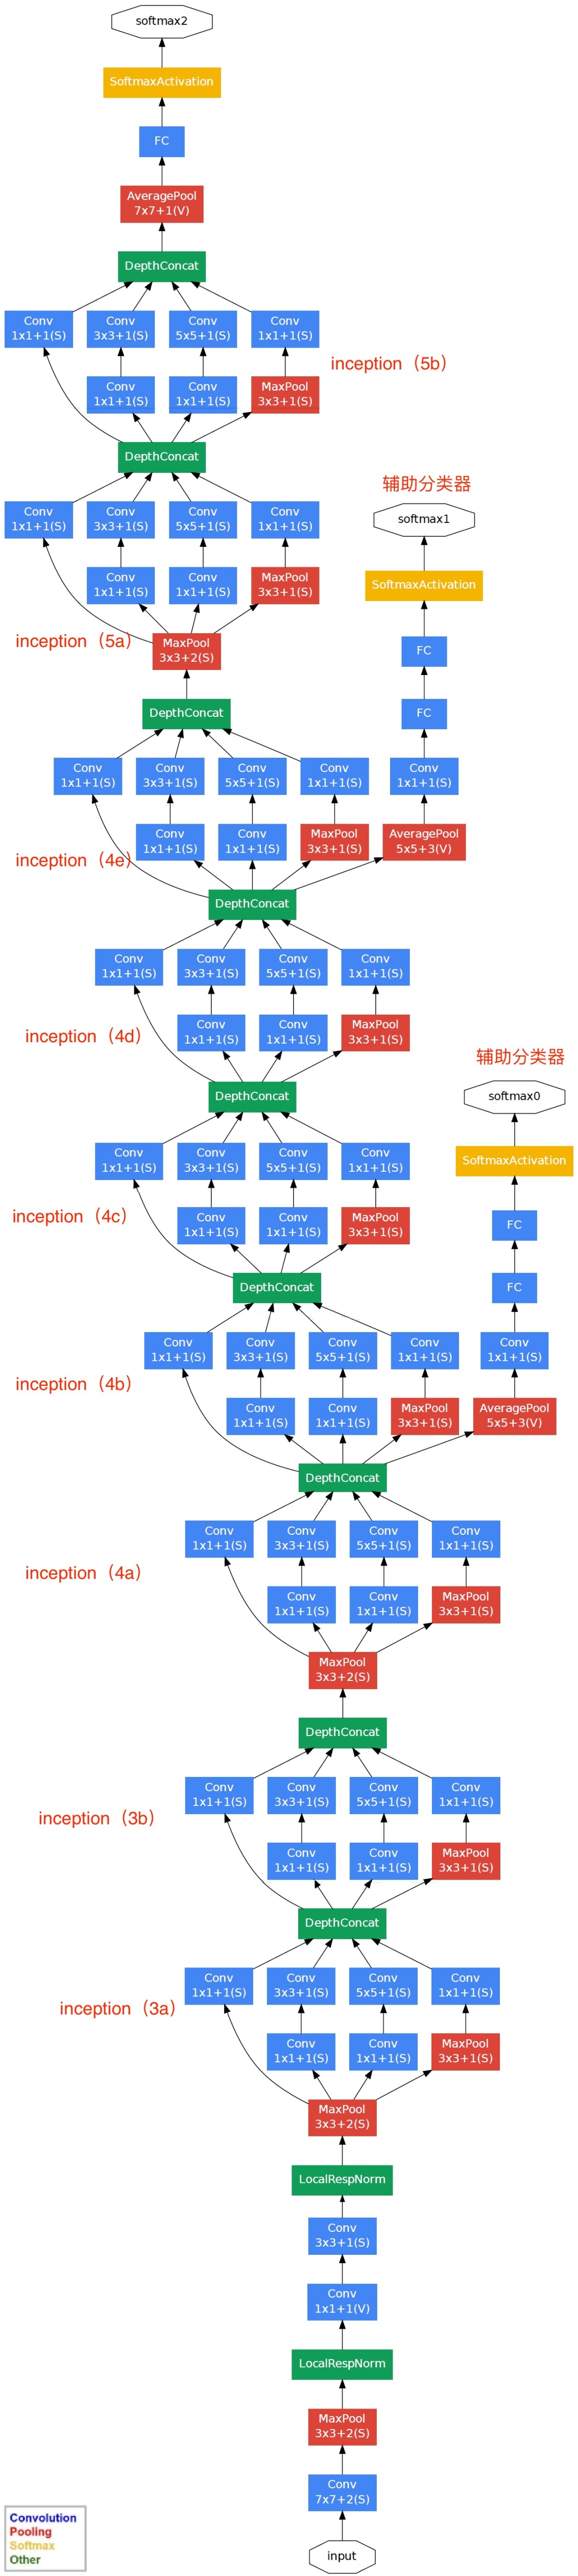 【pytorch图像分类】GoogLeNet网络结构